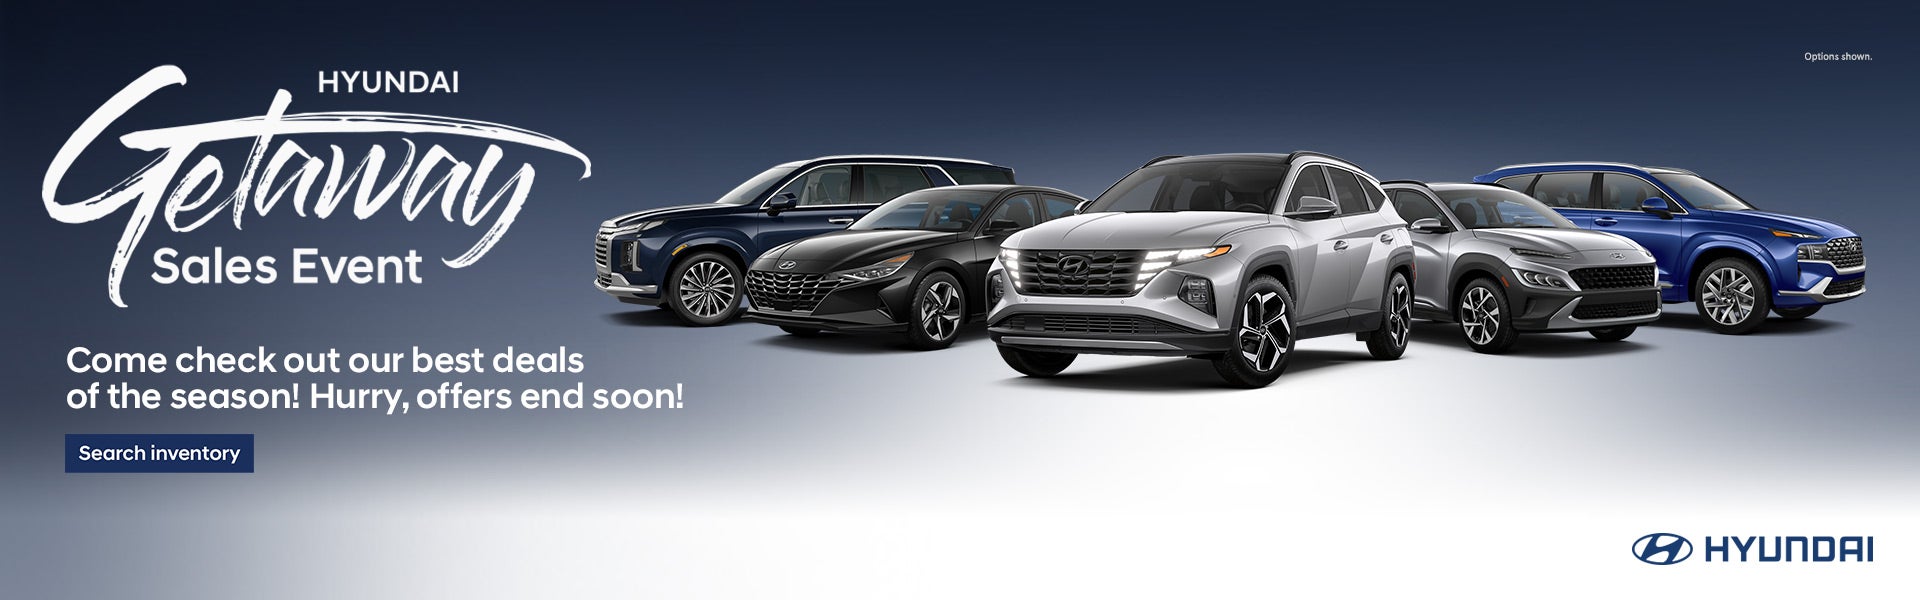 Hyundai Getaway Sales Event 